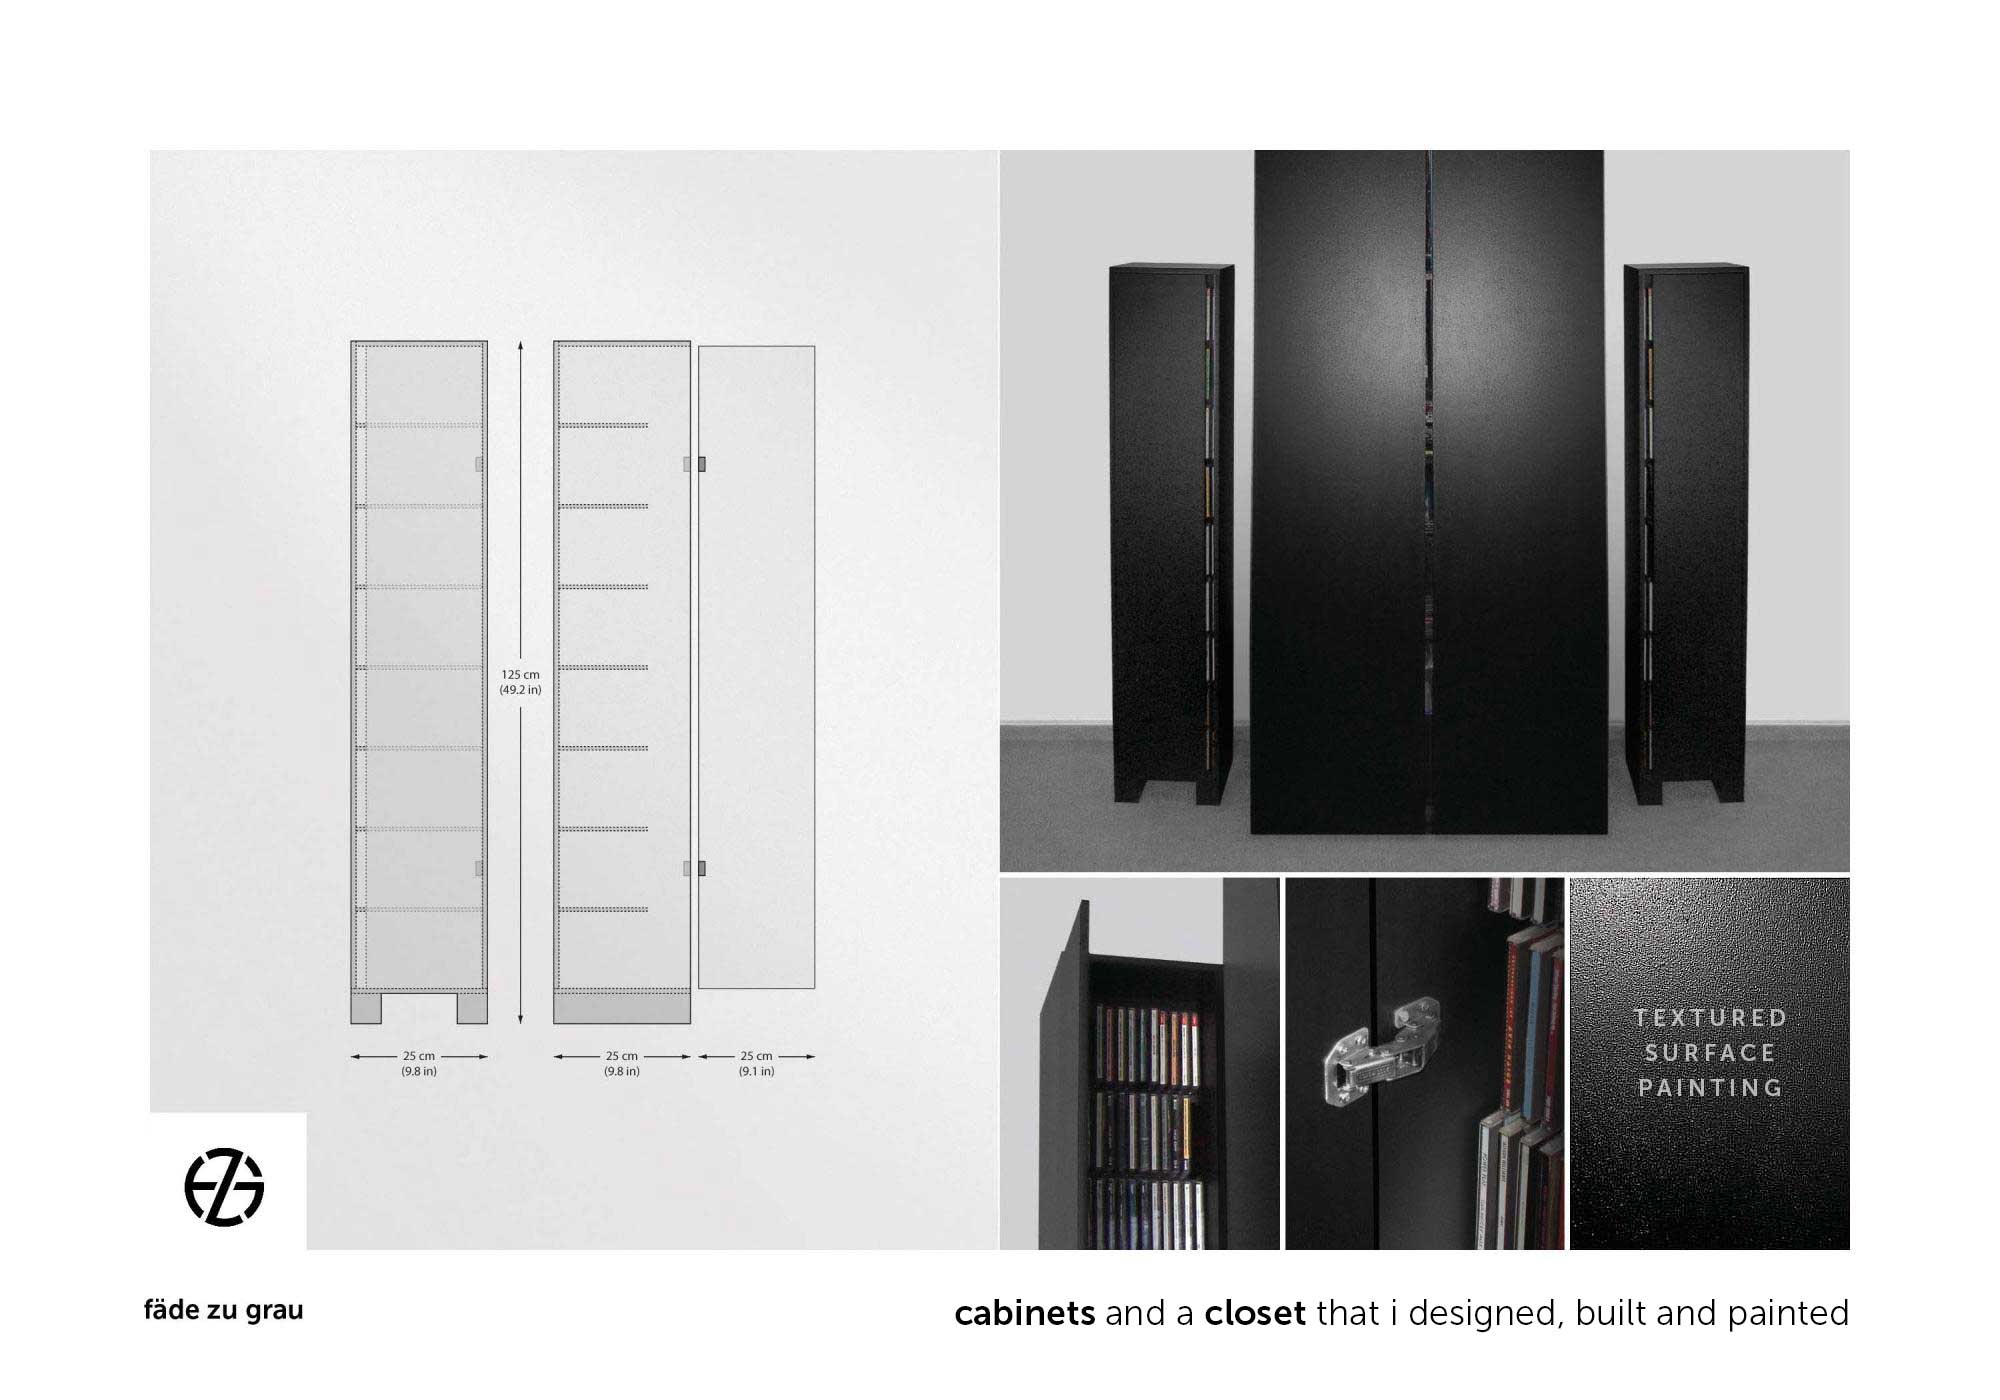 black cabinets designed and built by artist fade zu grau